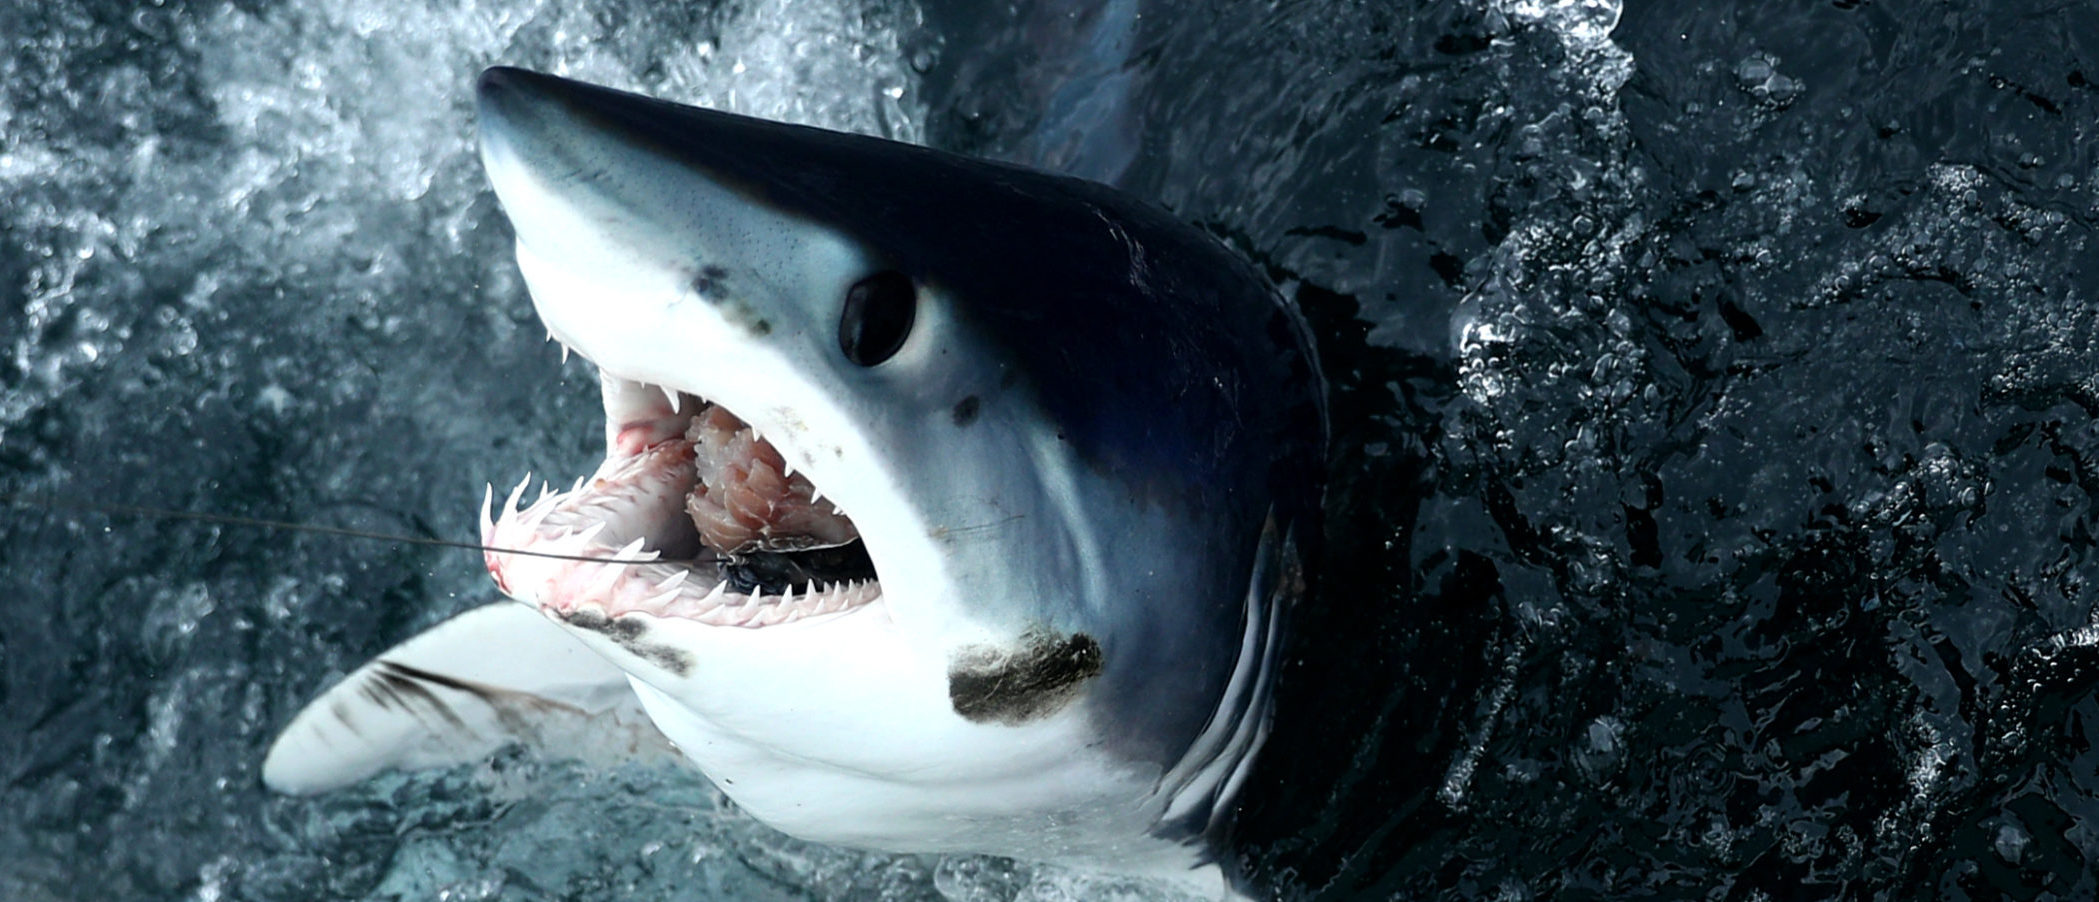 Porbeagle, targeting porbeagle in Ireland, shark fishing, sharks